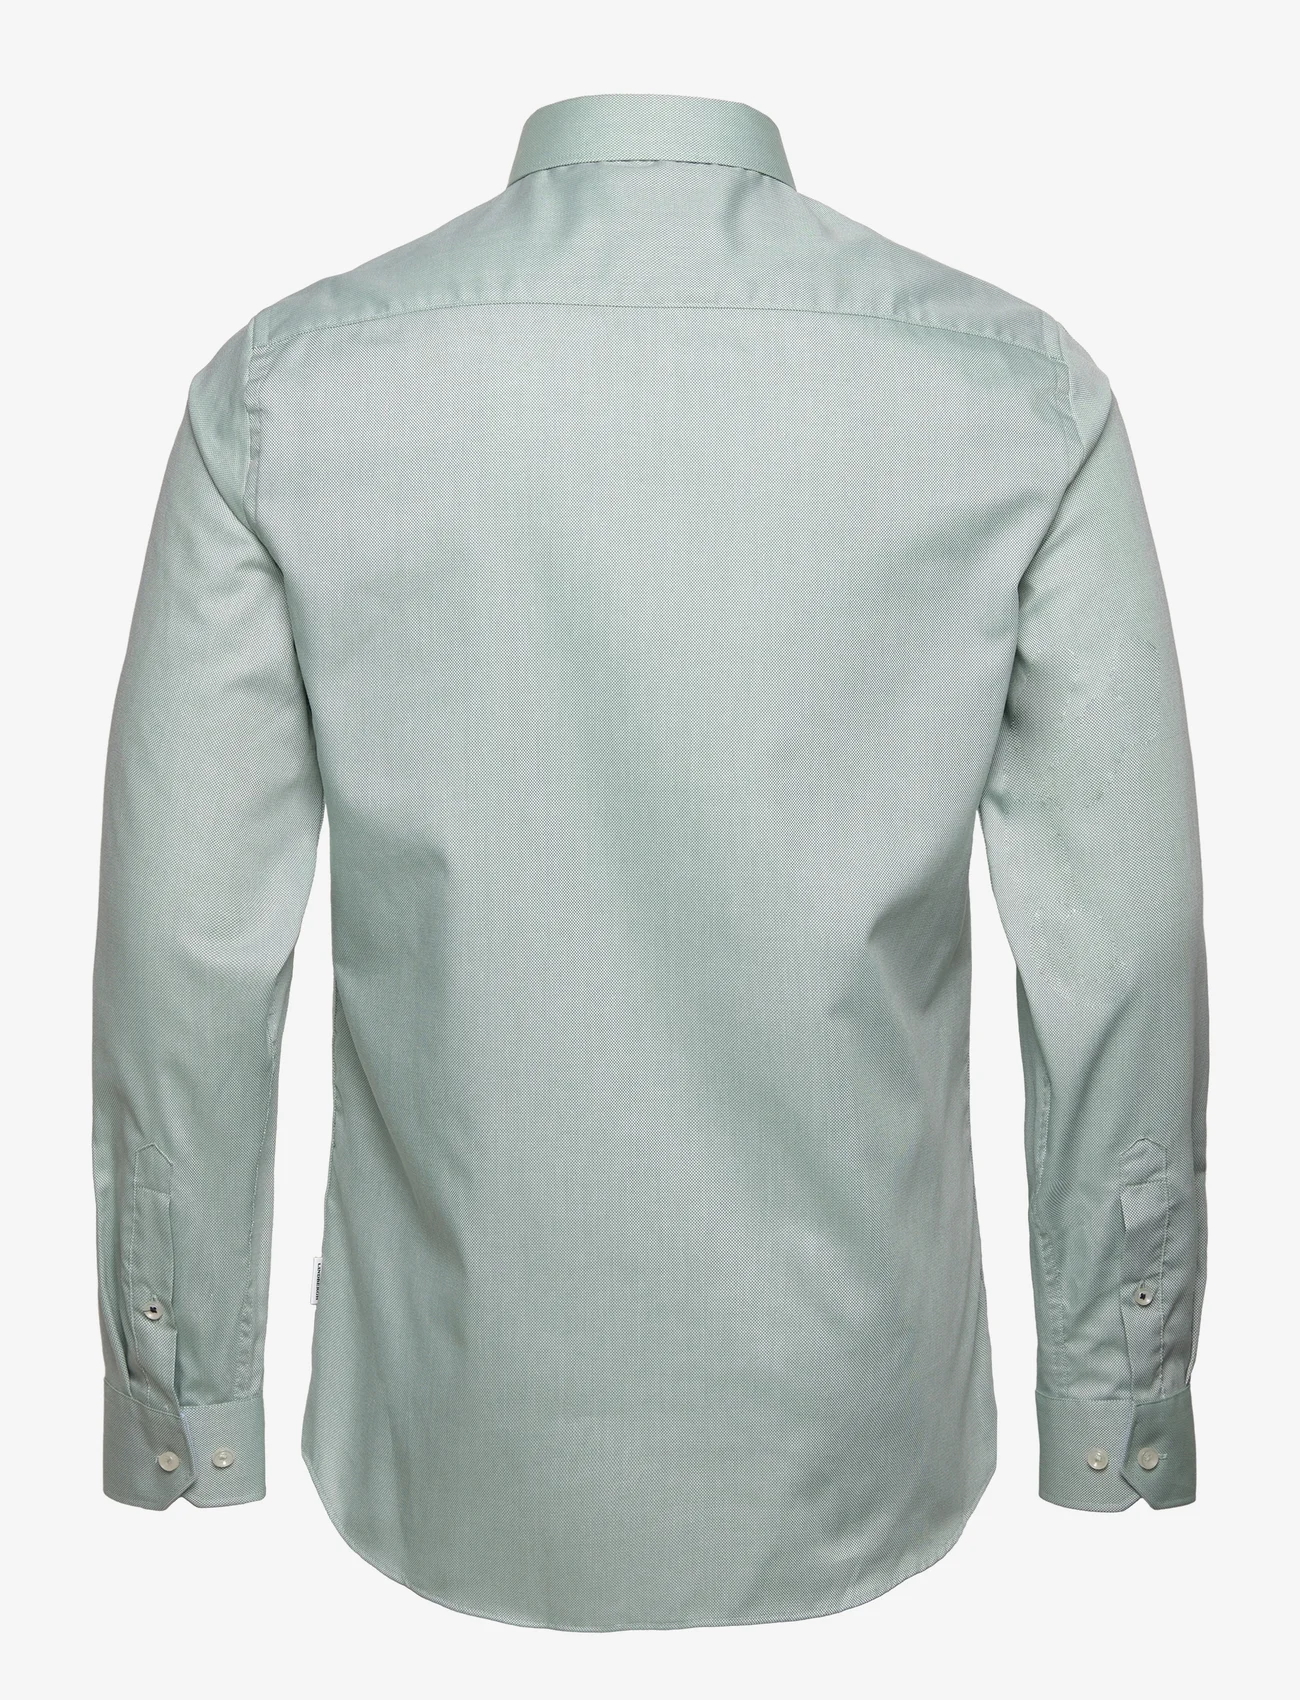 Lindbergh - Clean cool shirt L/S - laisvalaikio marškiniai - light green - 1